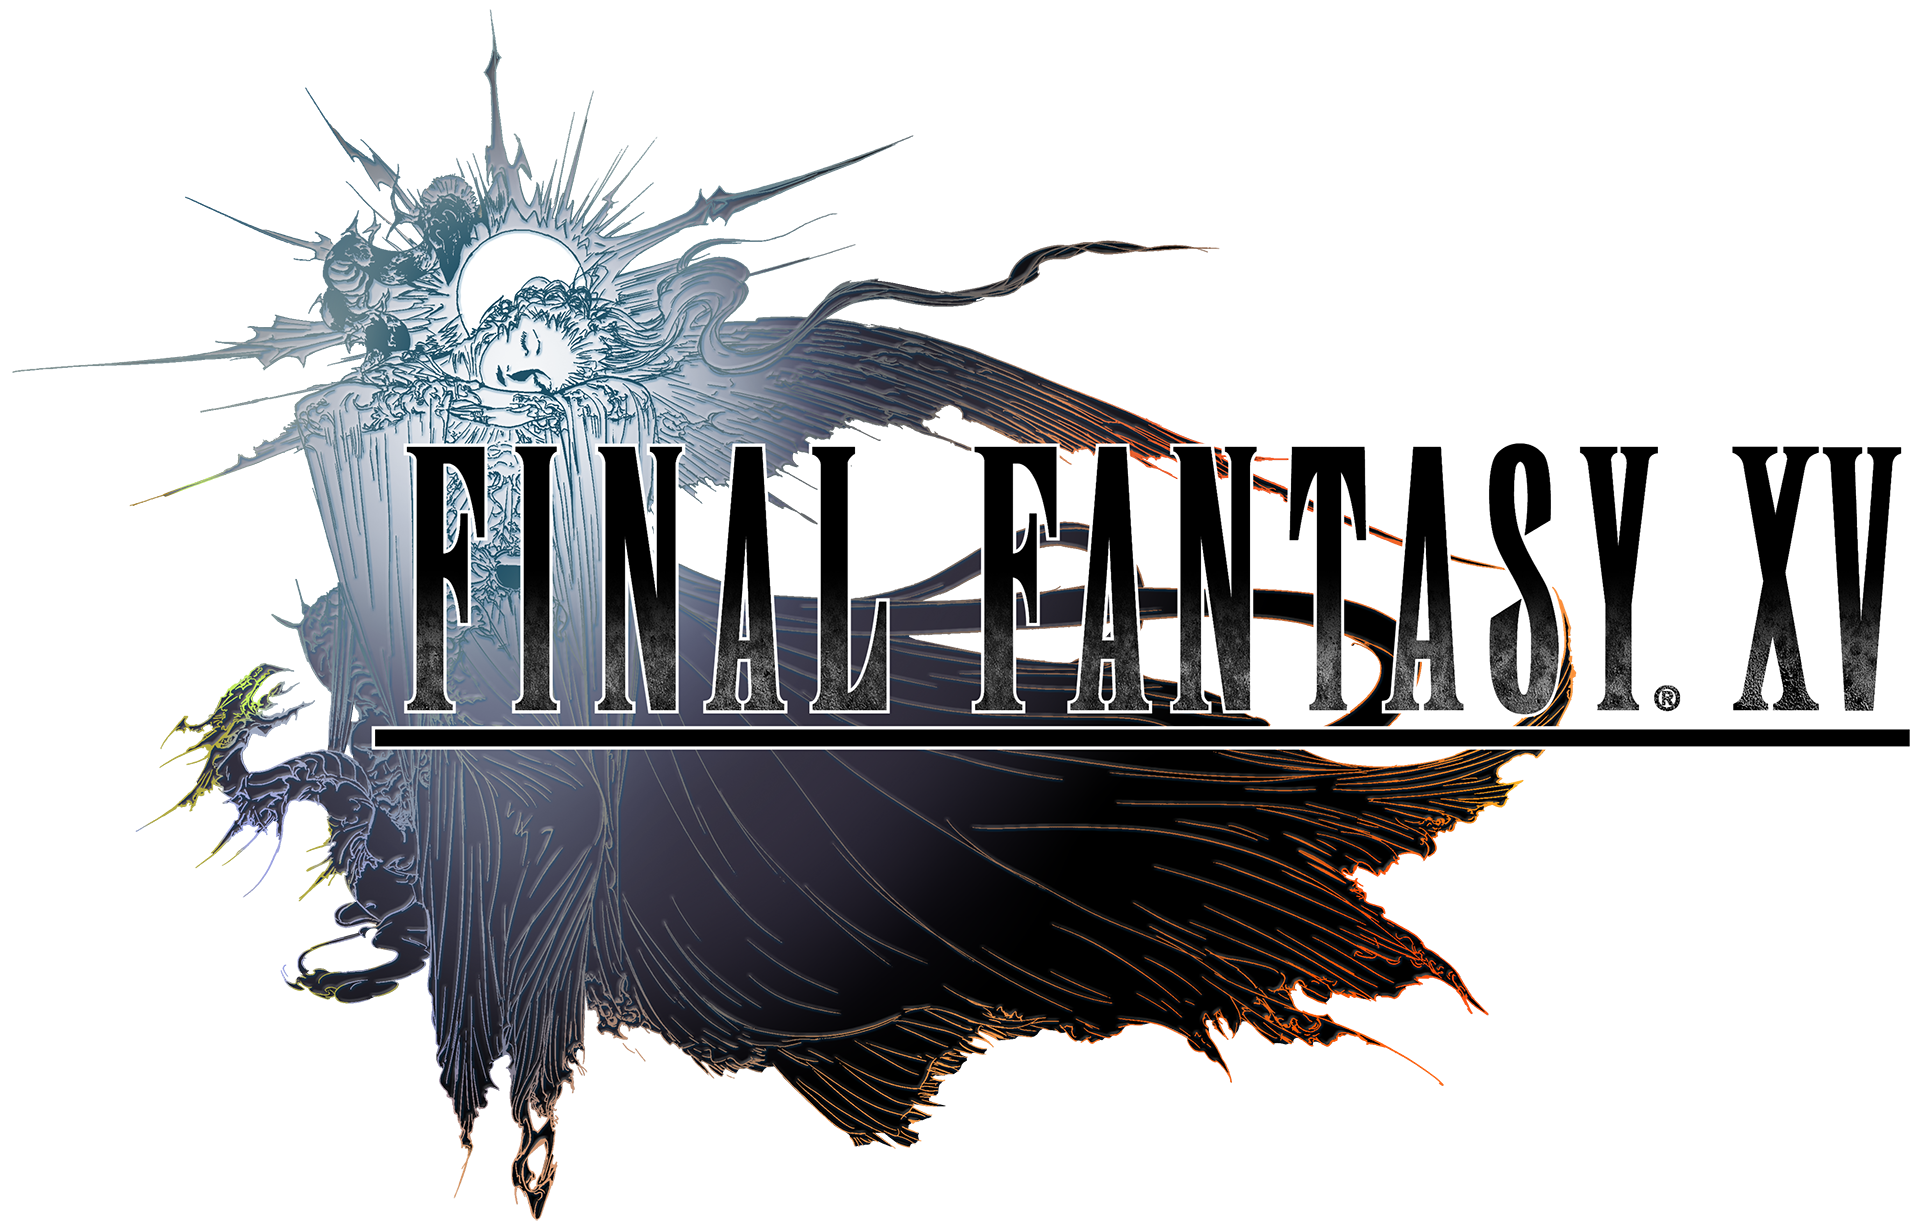 Final Fantasy XV Review